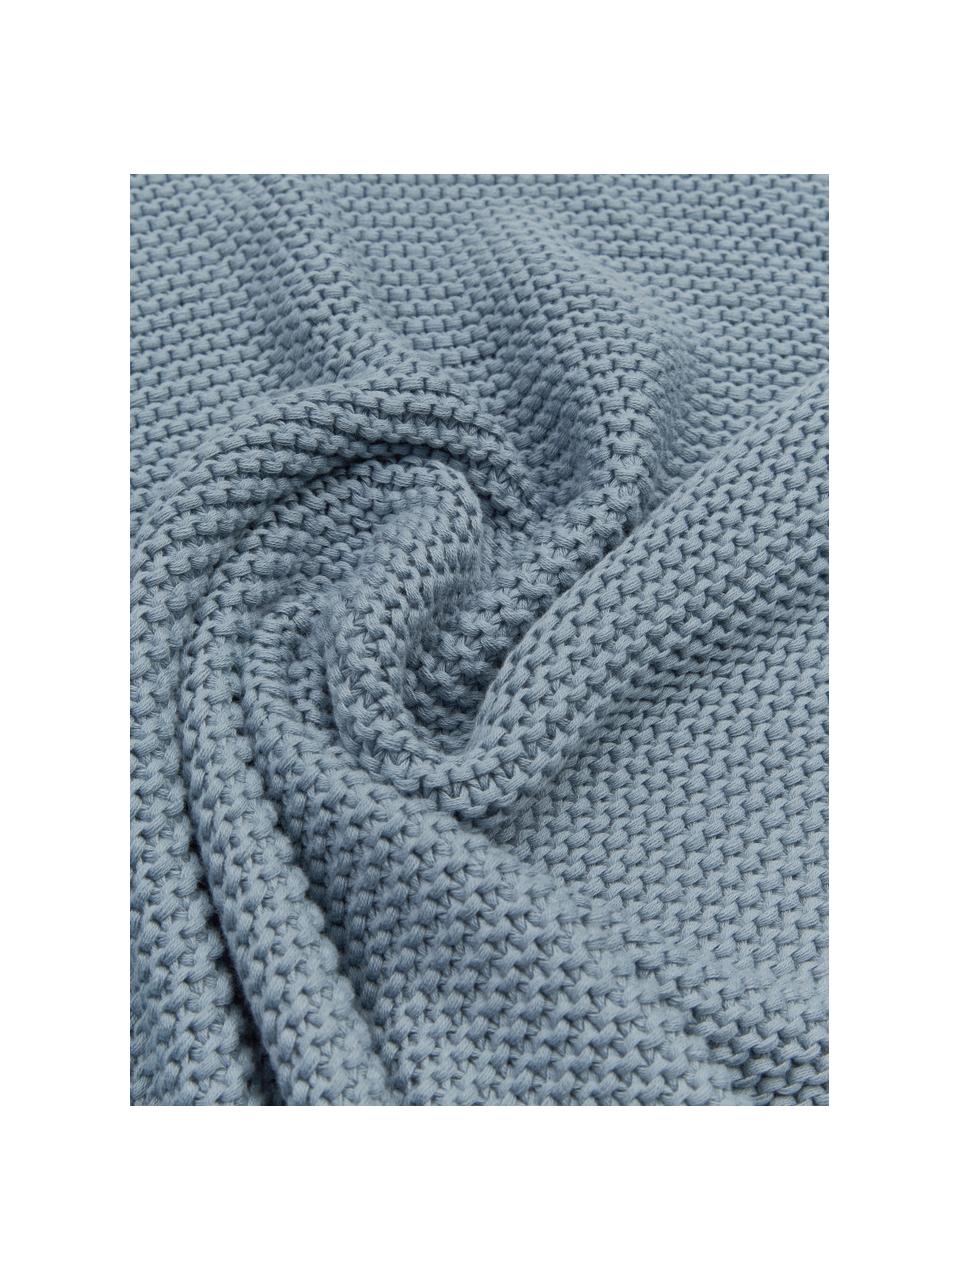 Federa arredo a maglia in cotone organico blu Adalyn, 100% cotone organico certificato GOTS, Blu, Larg. 40 x Lung. 40 cm